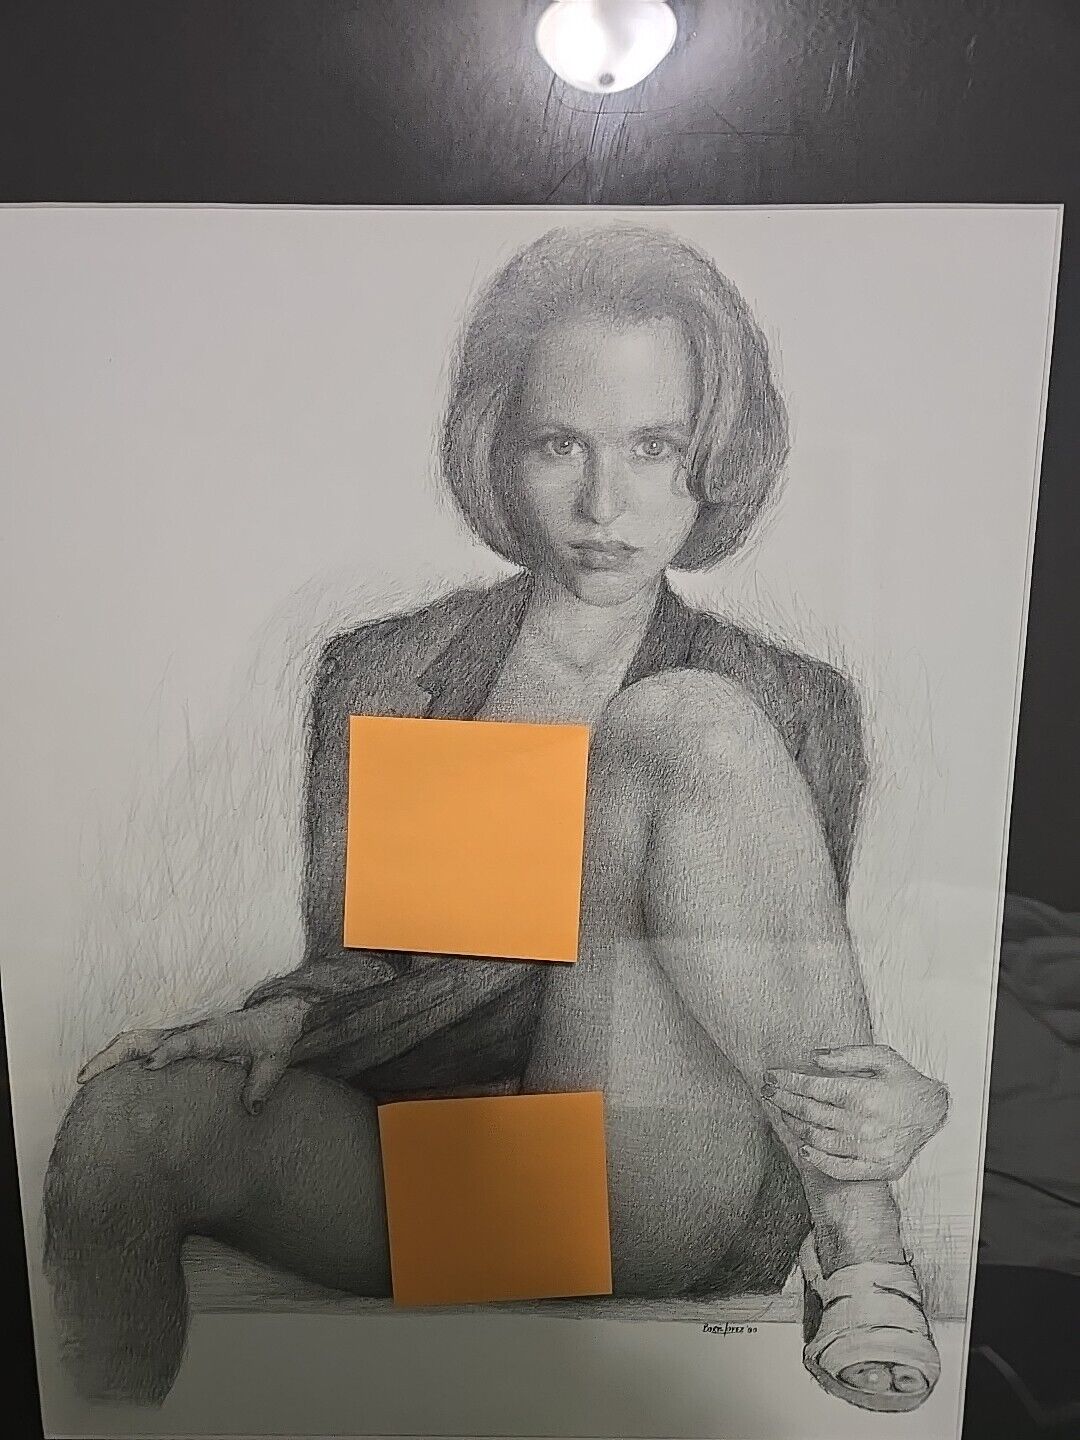 X-Files Gillian Anderson Playboy Style Portrait (Framed)